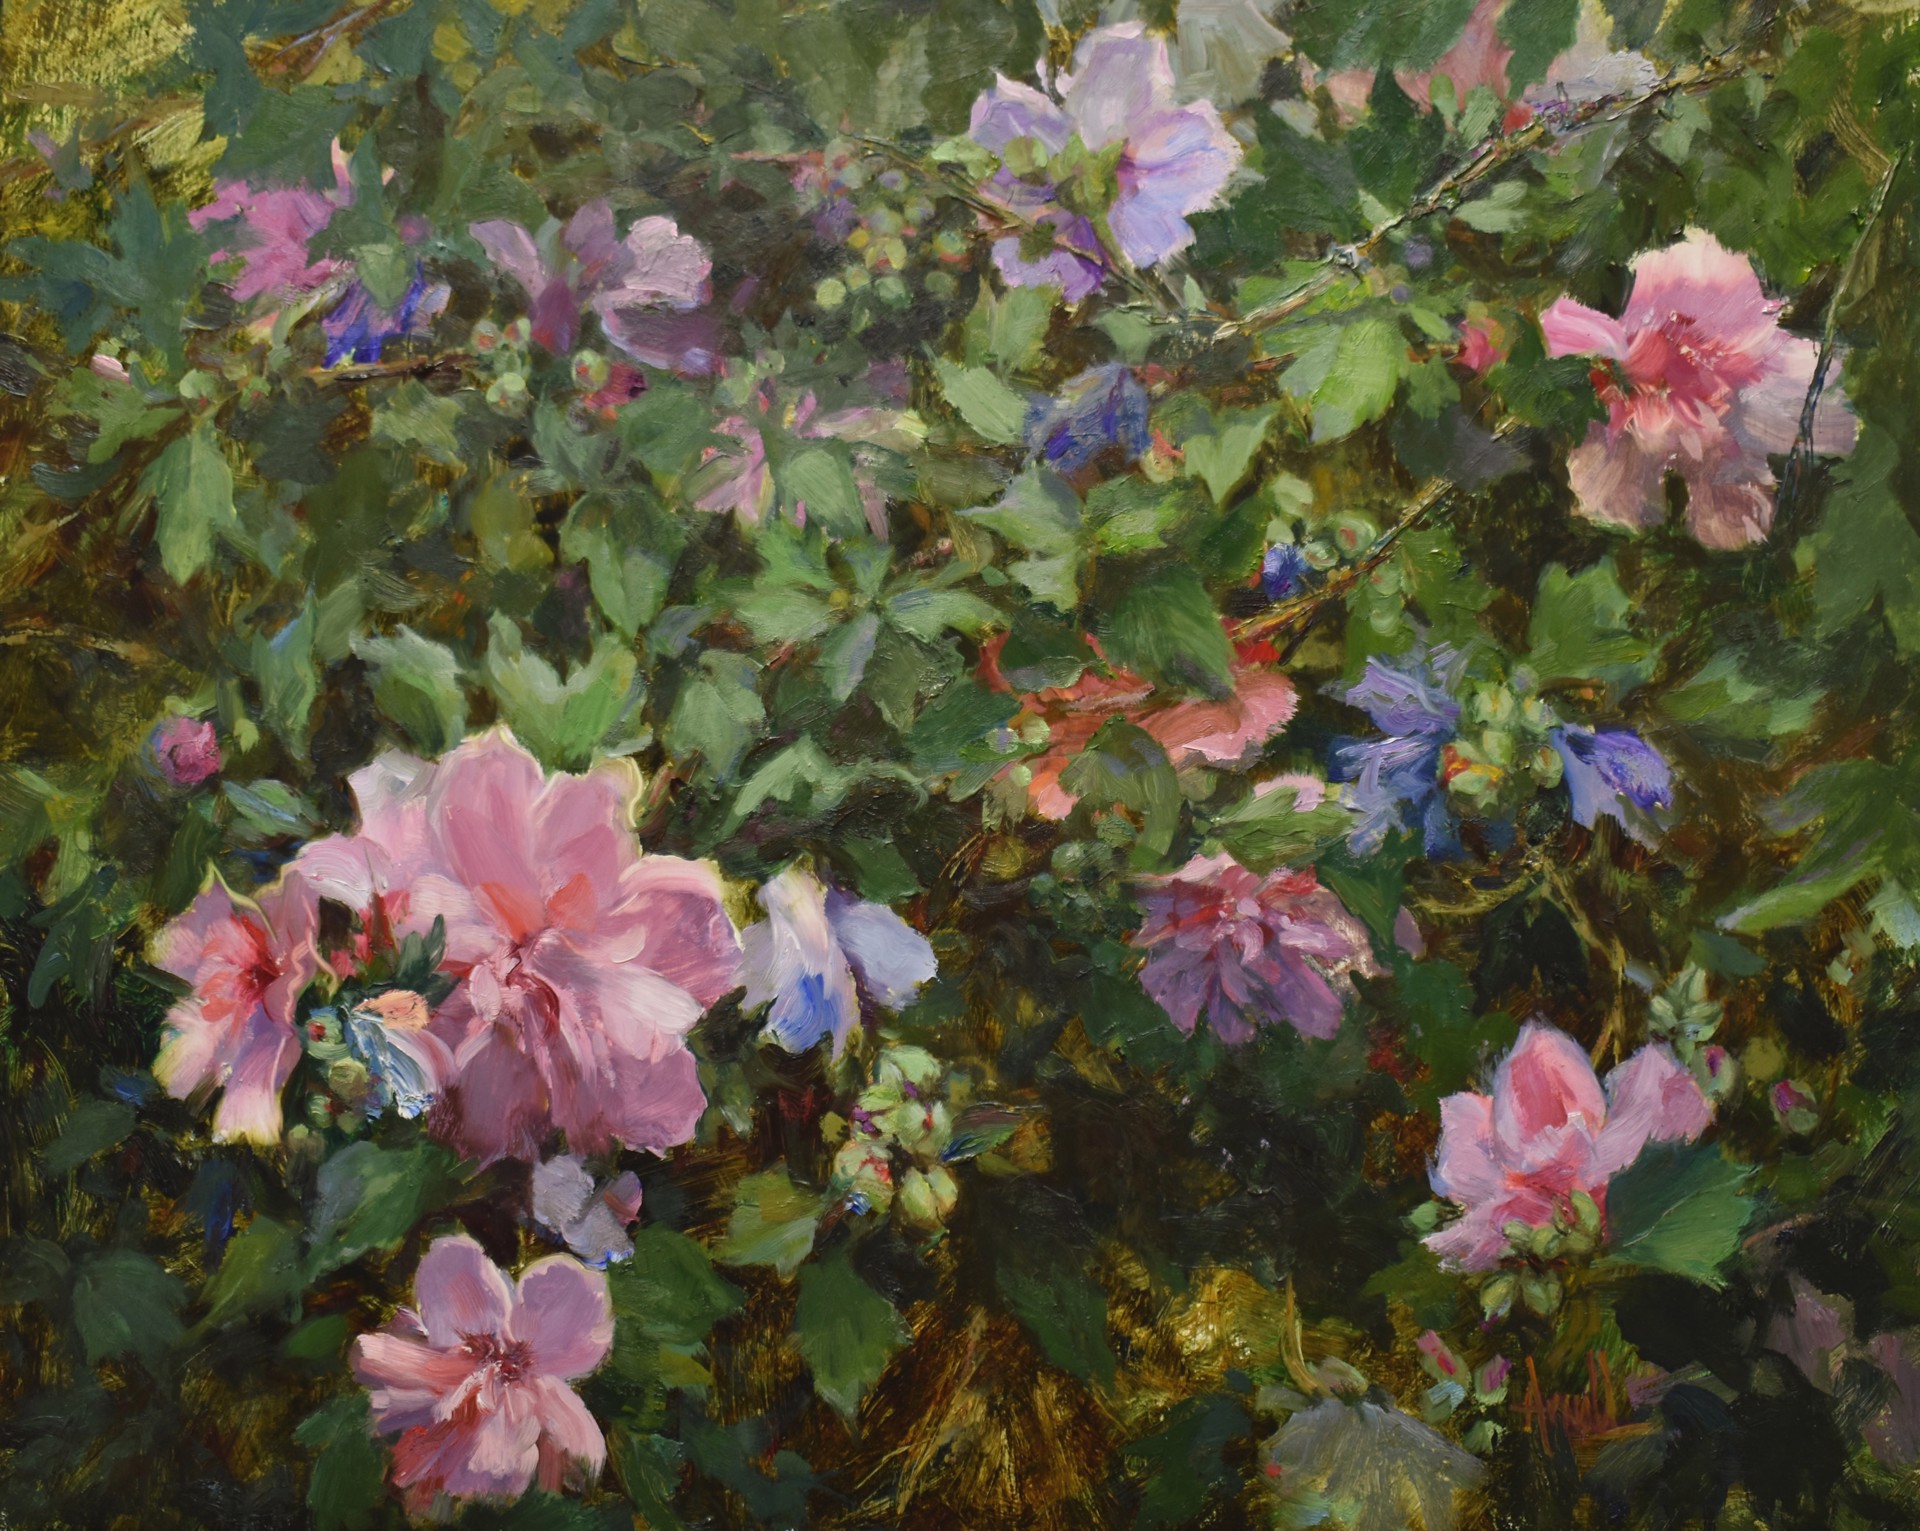 Rose of Sharon by Carol Arnold